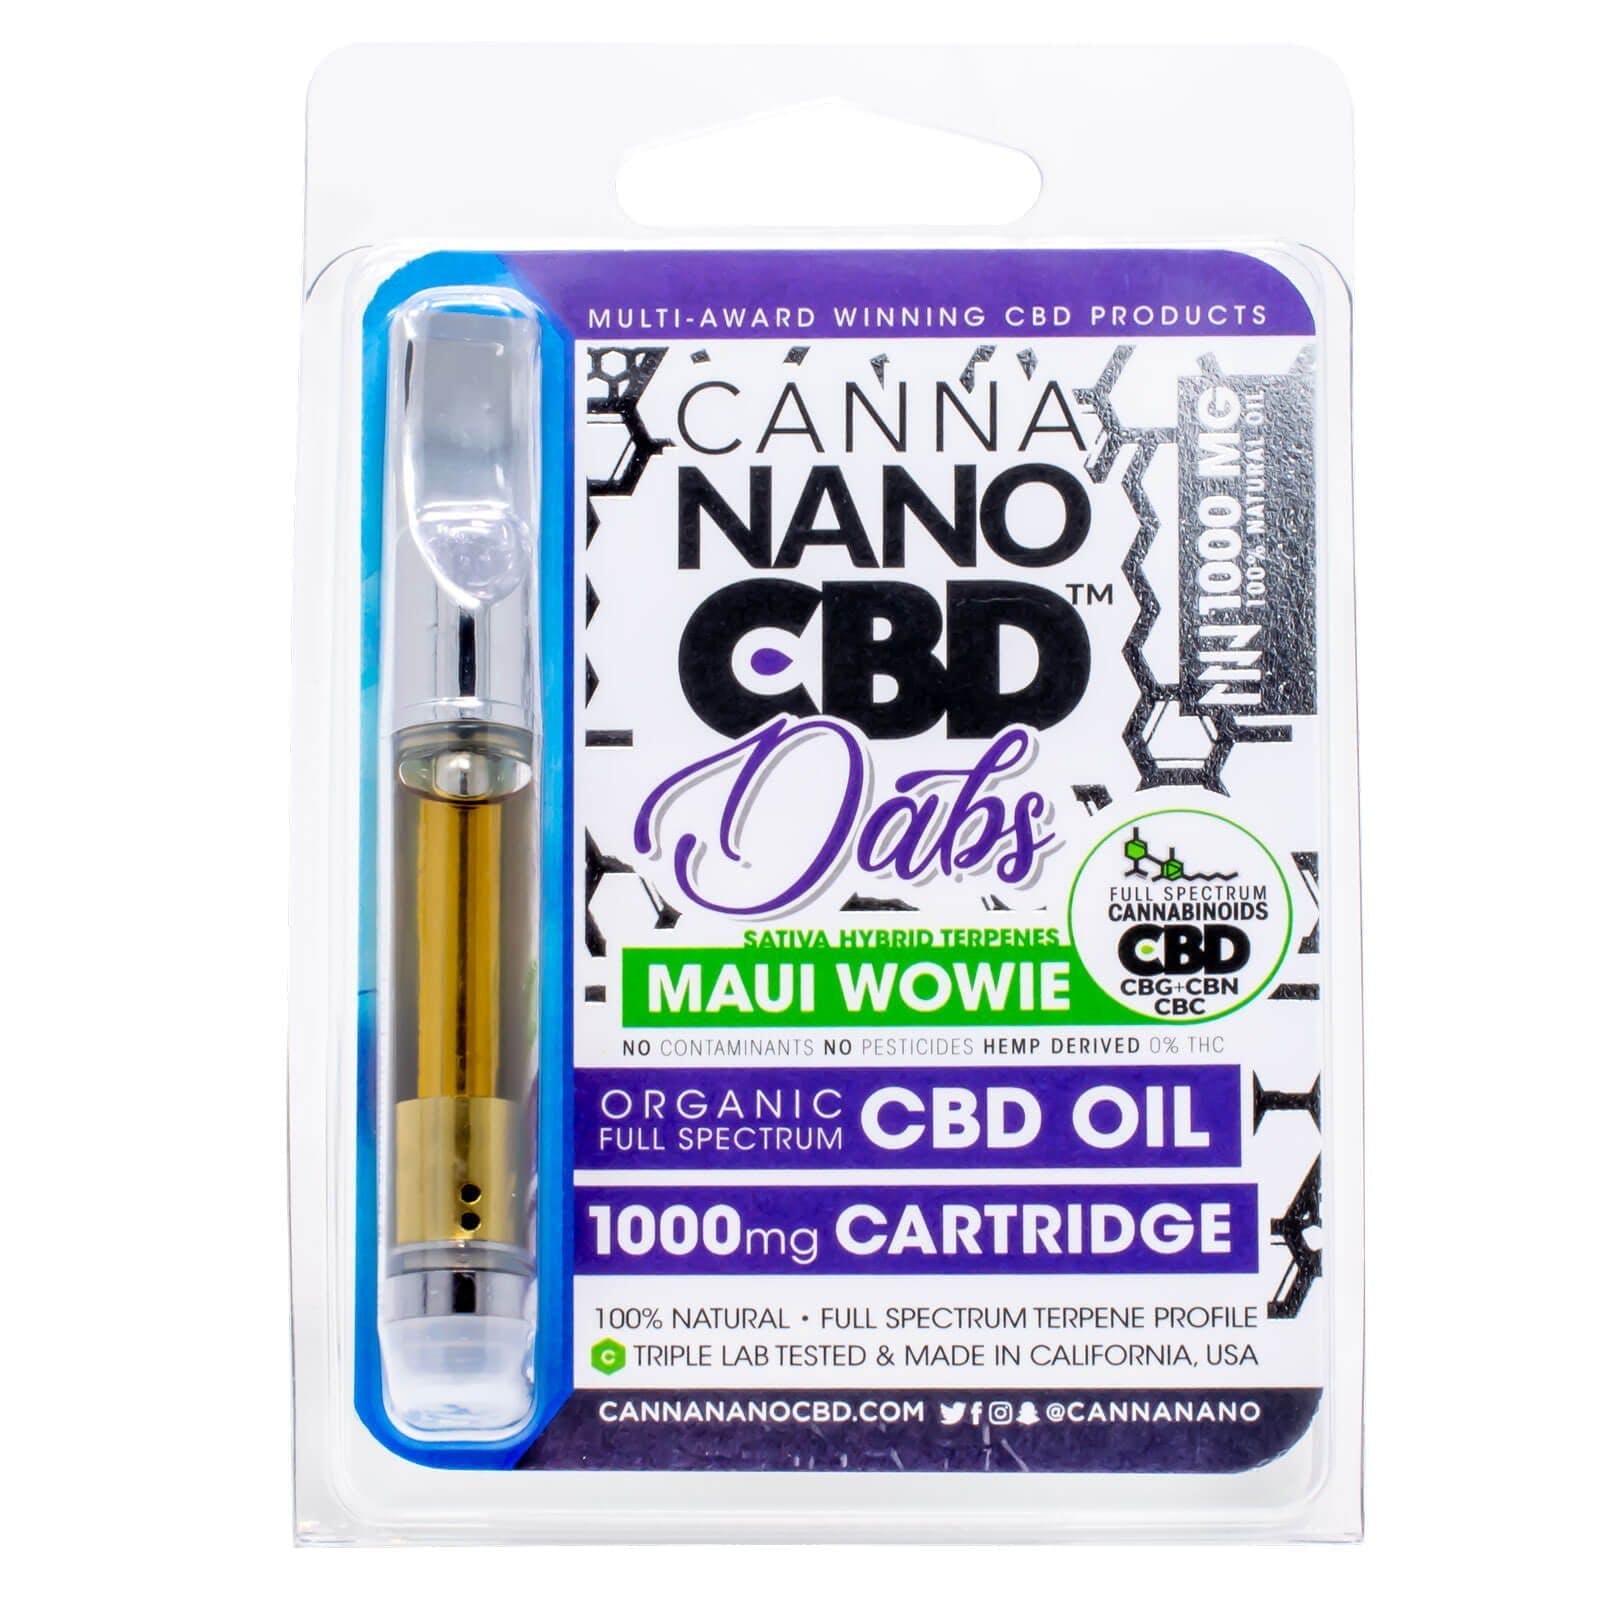 marijuana-dispensaries-cbd-shop-in-huntington-beach-canna-nano-cbd-cartridge-dabs